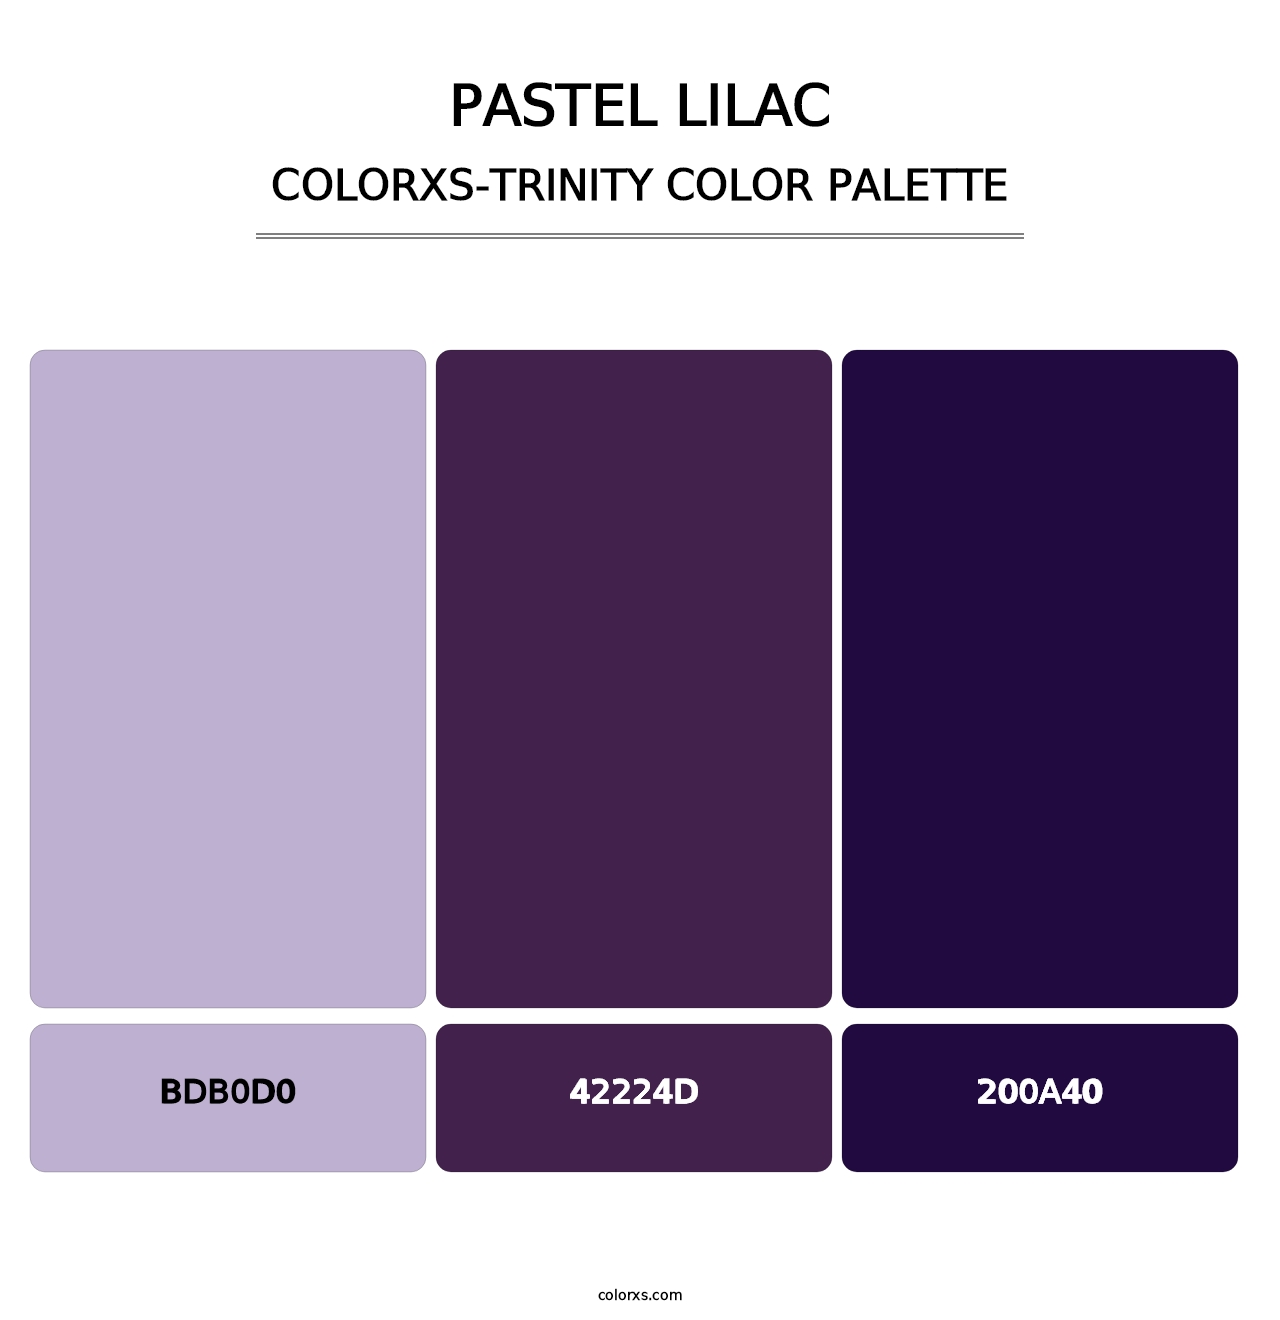 Pastel Lilac - Colorxs Trinity Palette